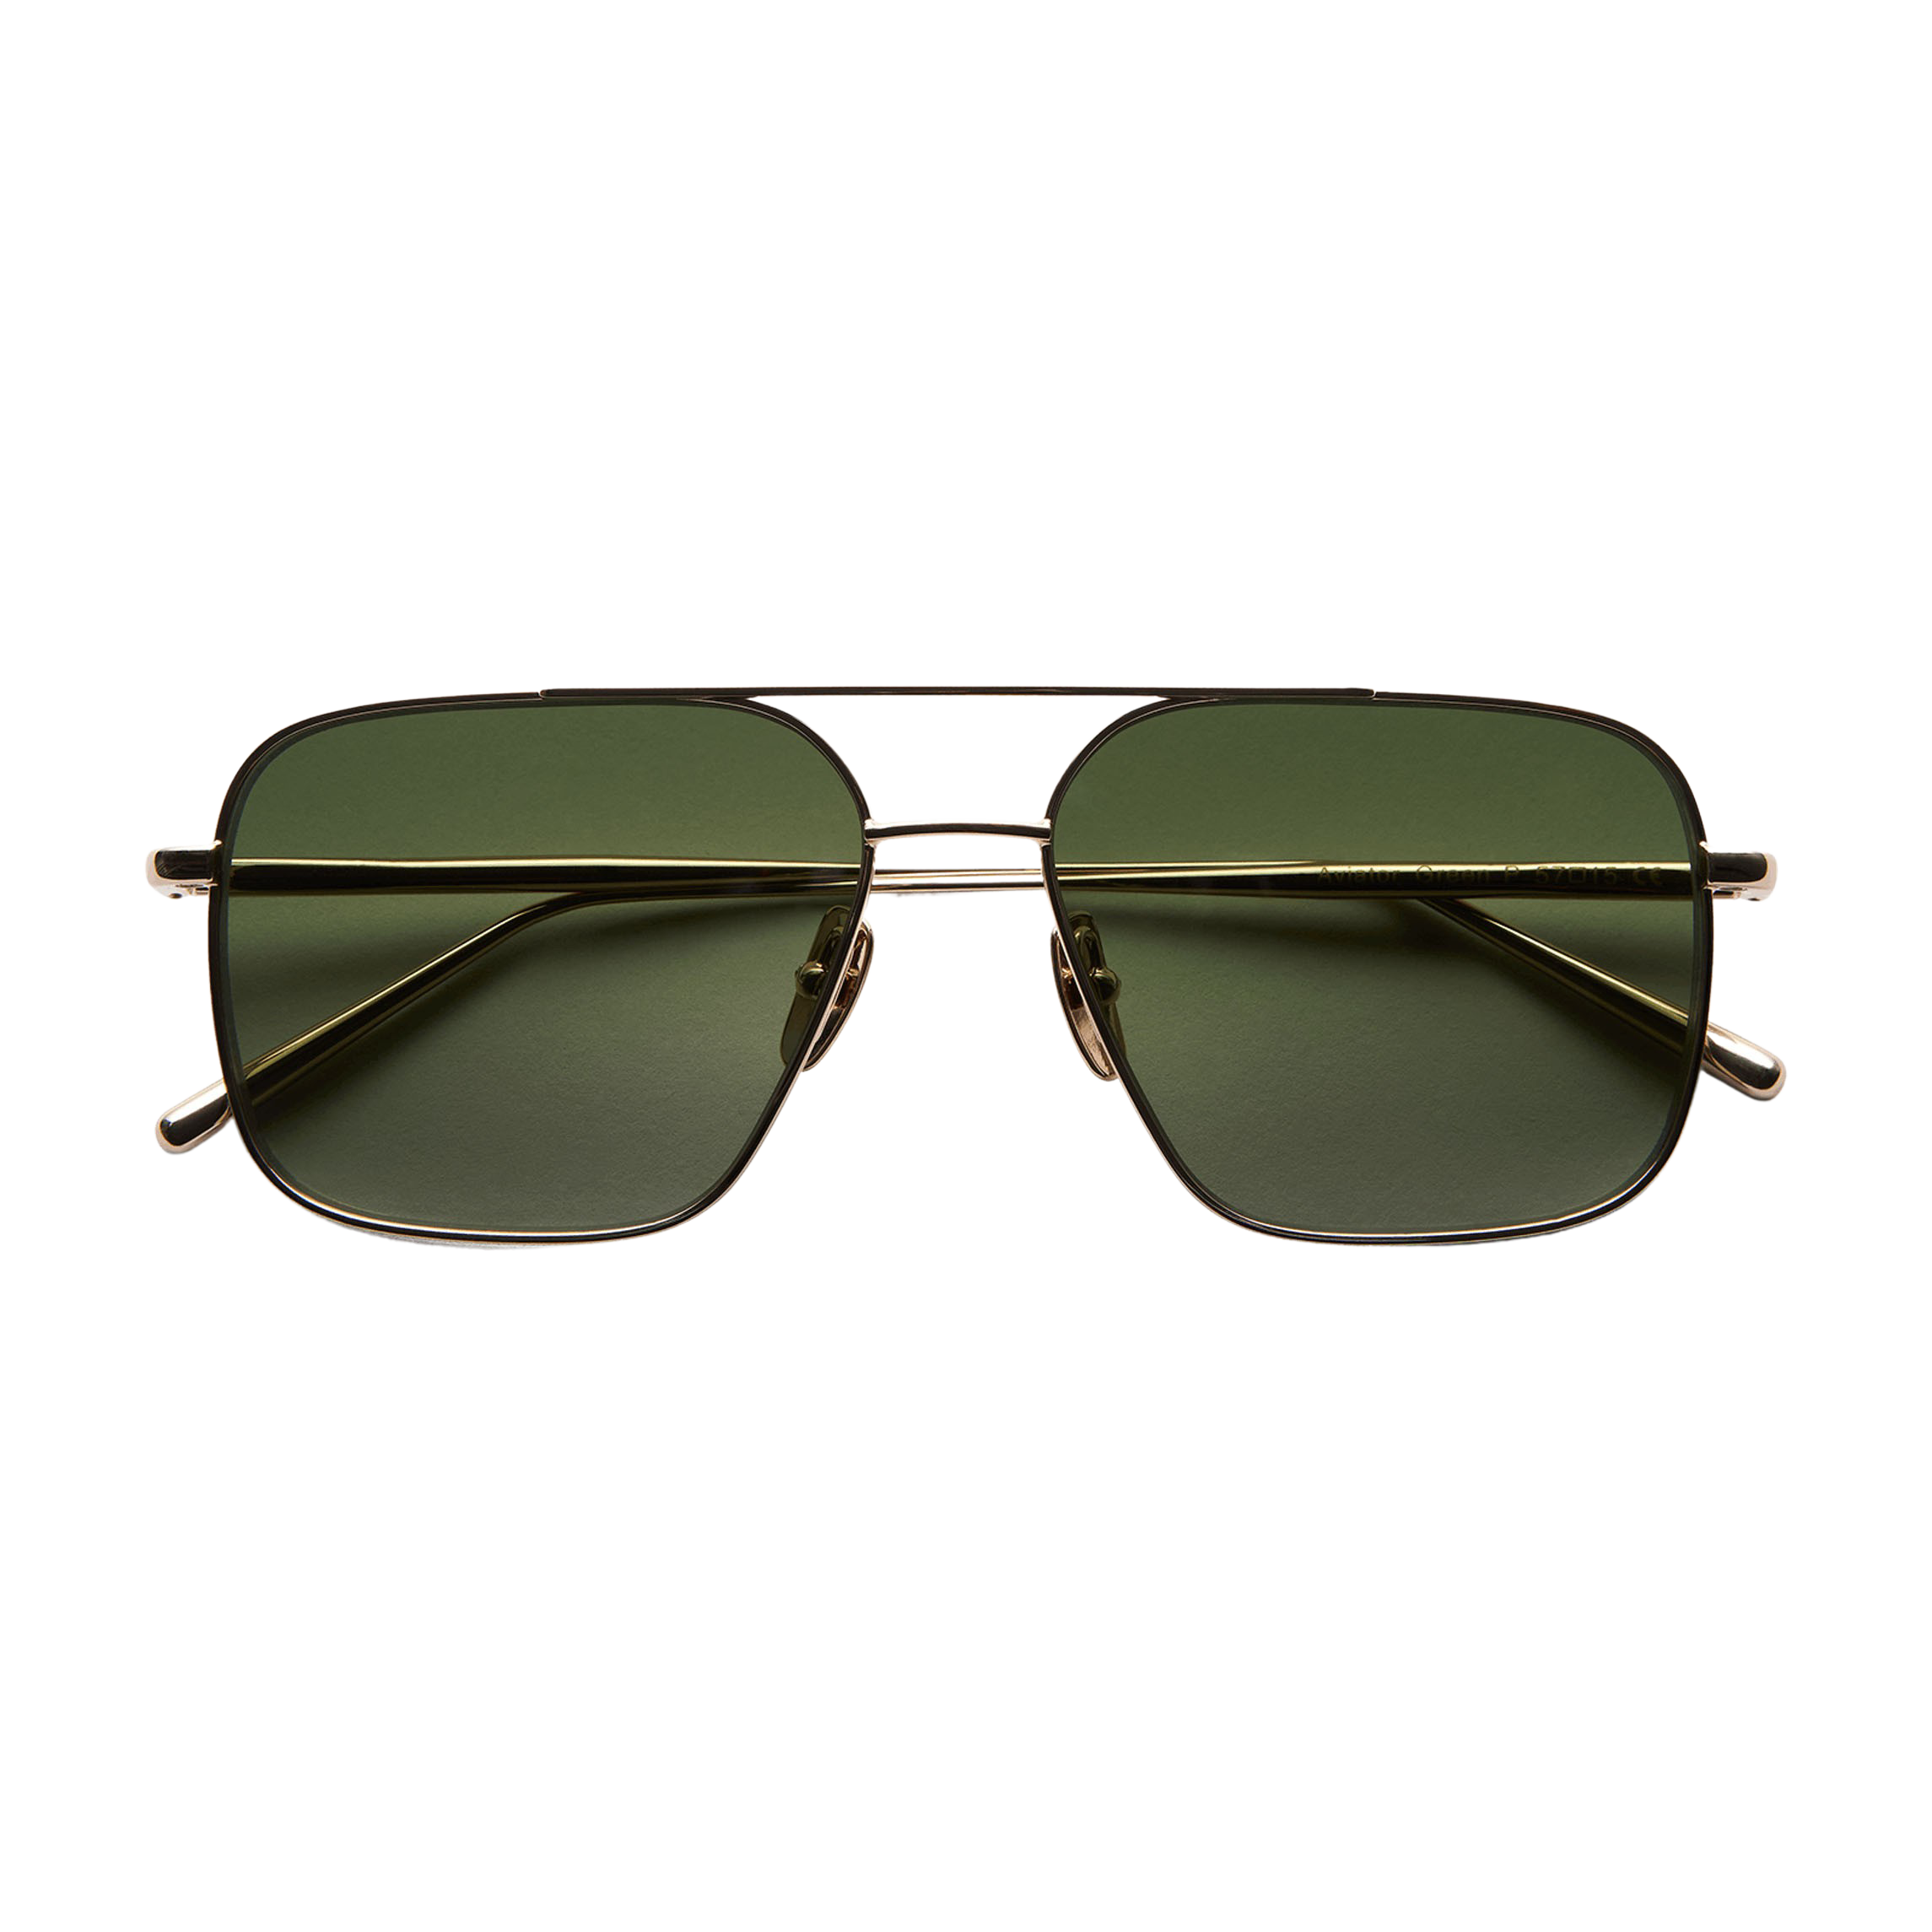 Chimi Eyewear Steel Aviator Green Lenses Sunglasses 56mm Feature